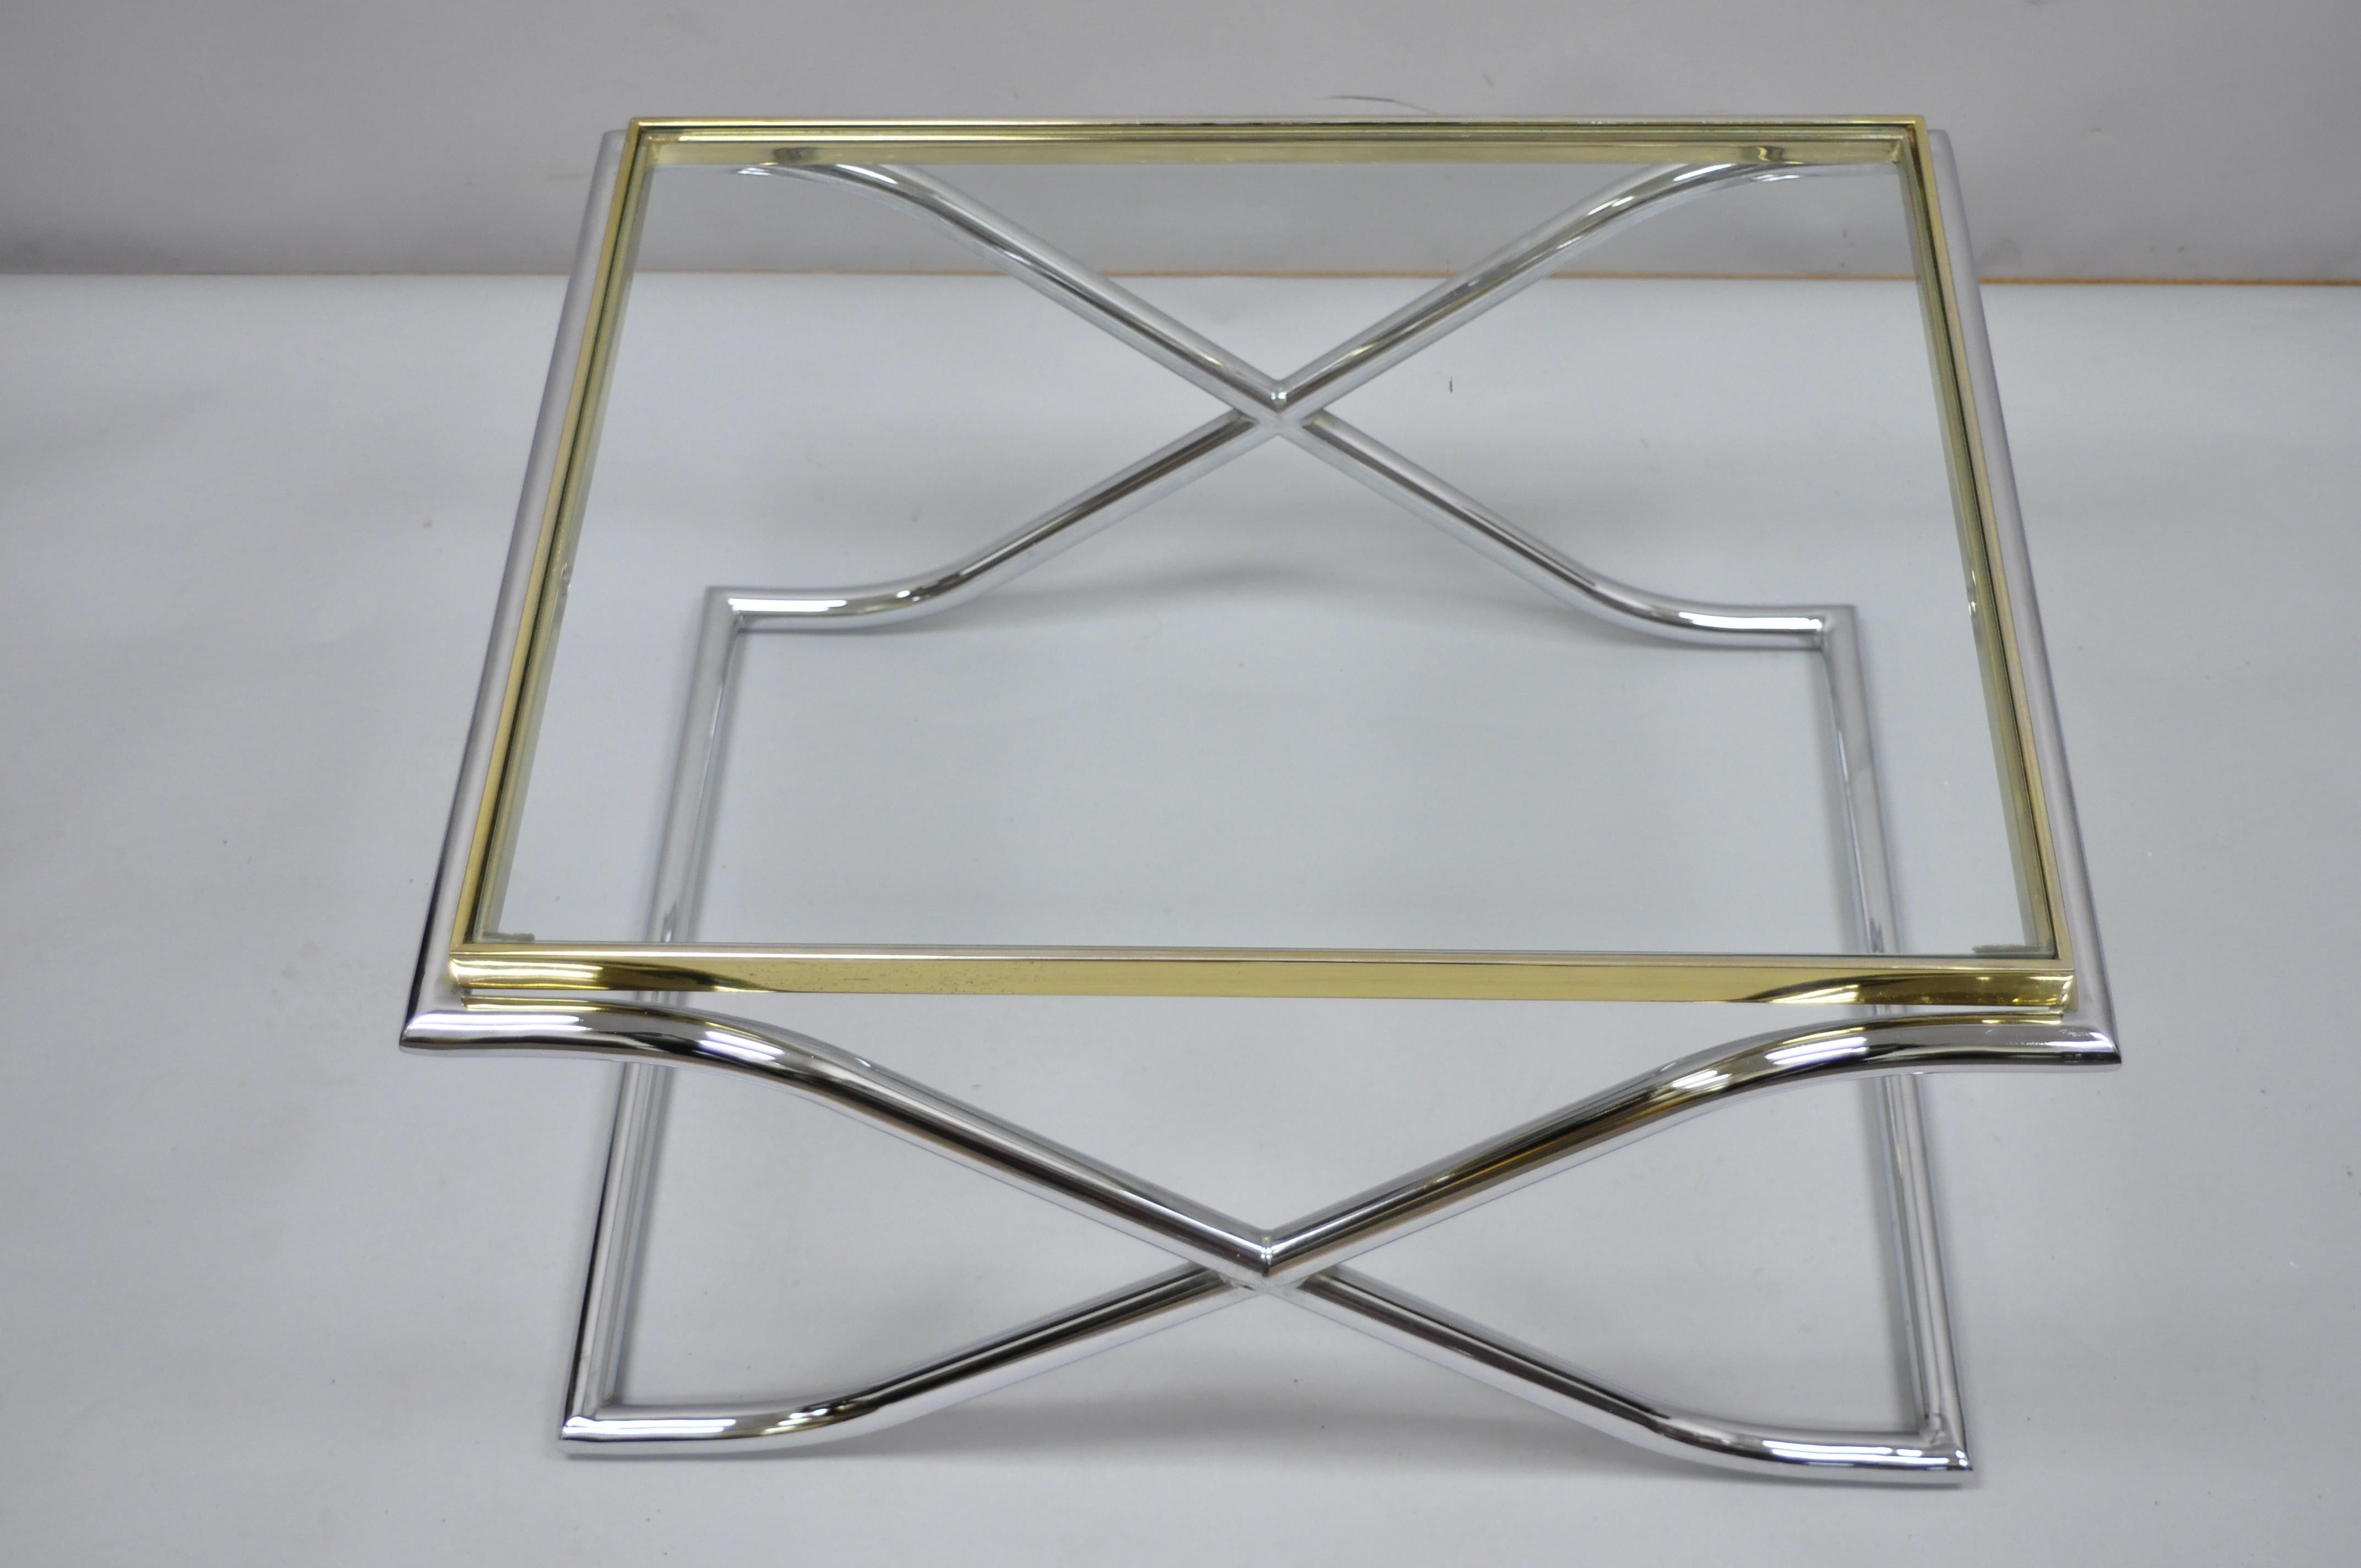 x frame glass coffee table